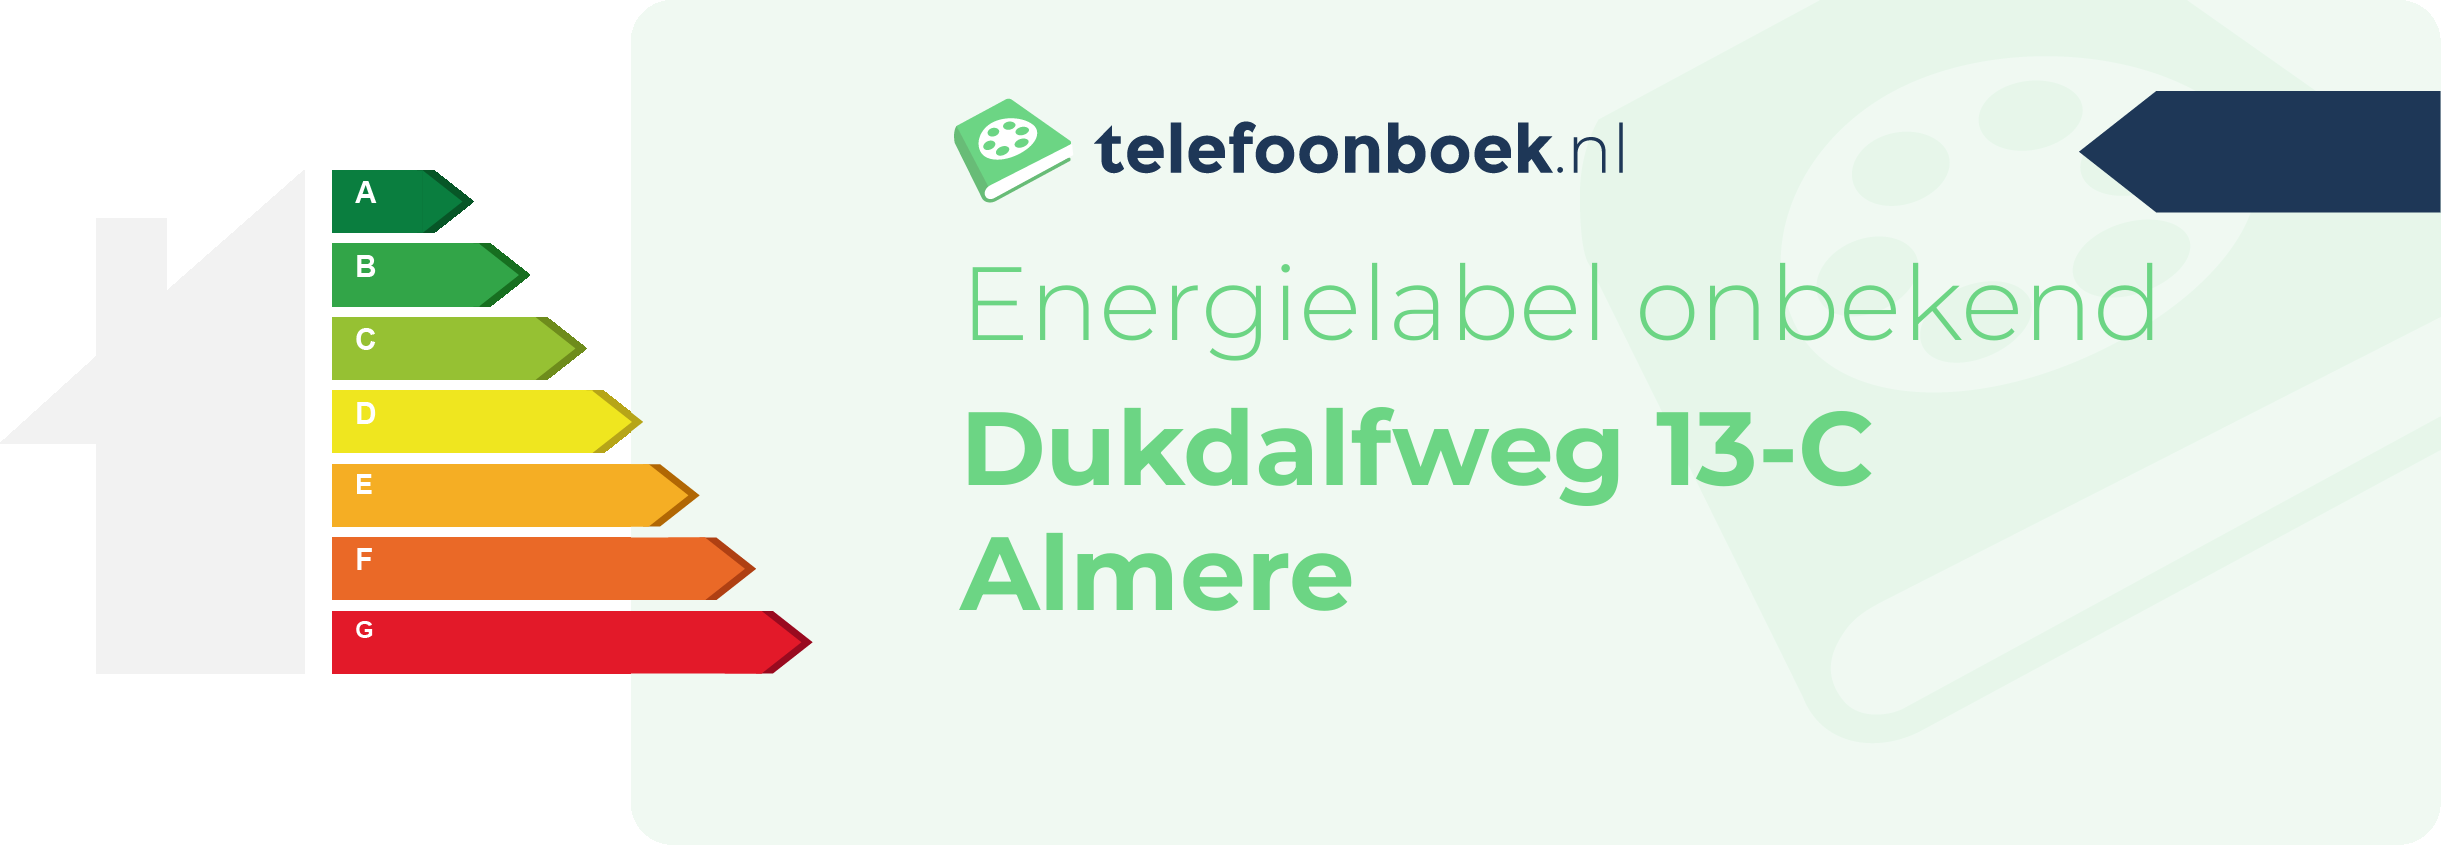 Energielabel Dukdalfweg 13-C Almere